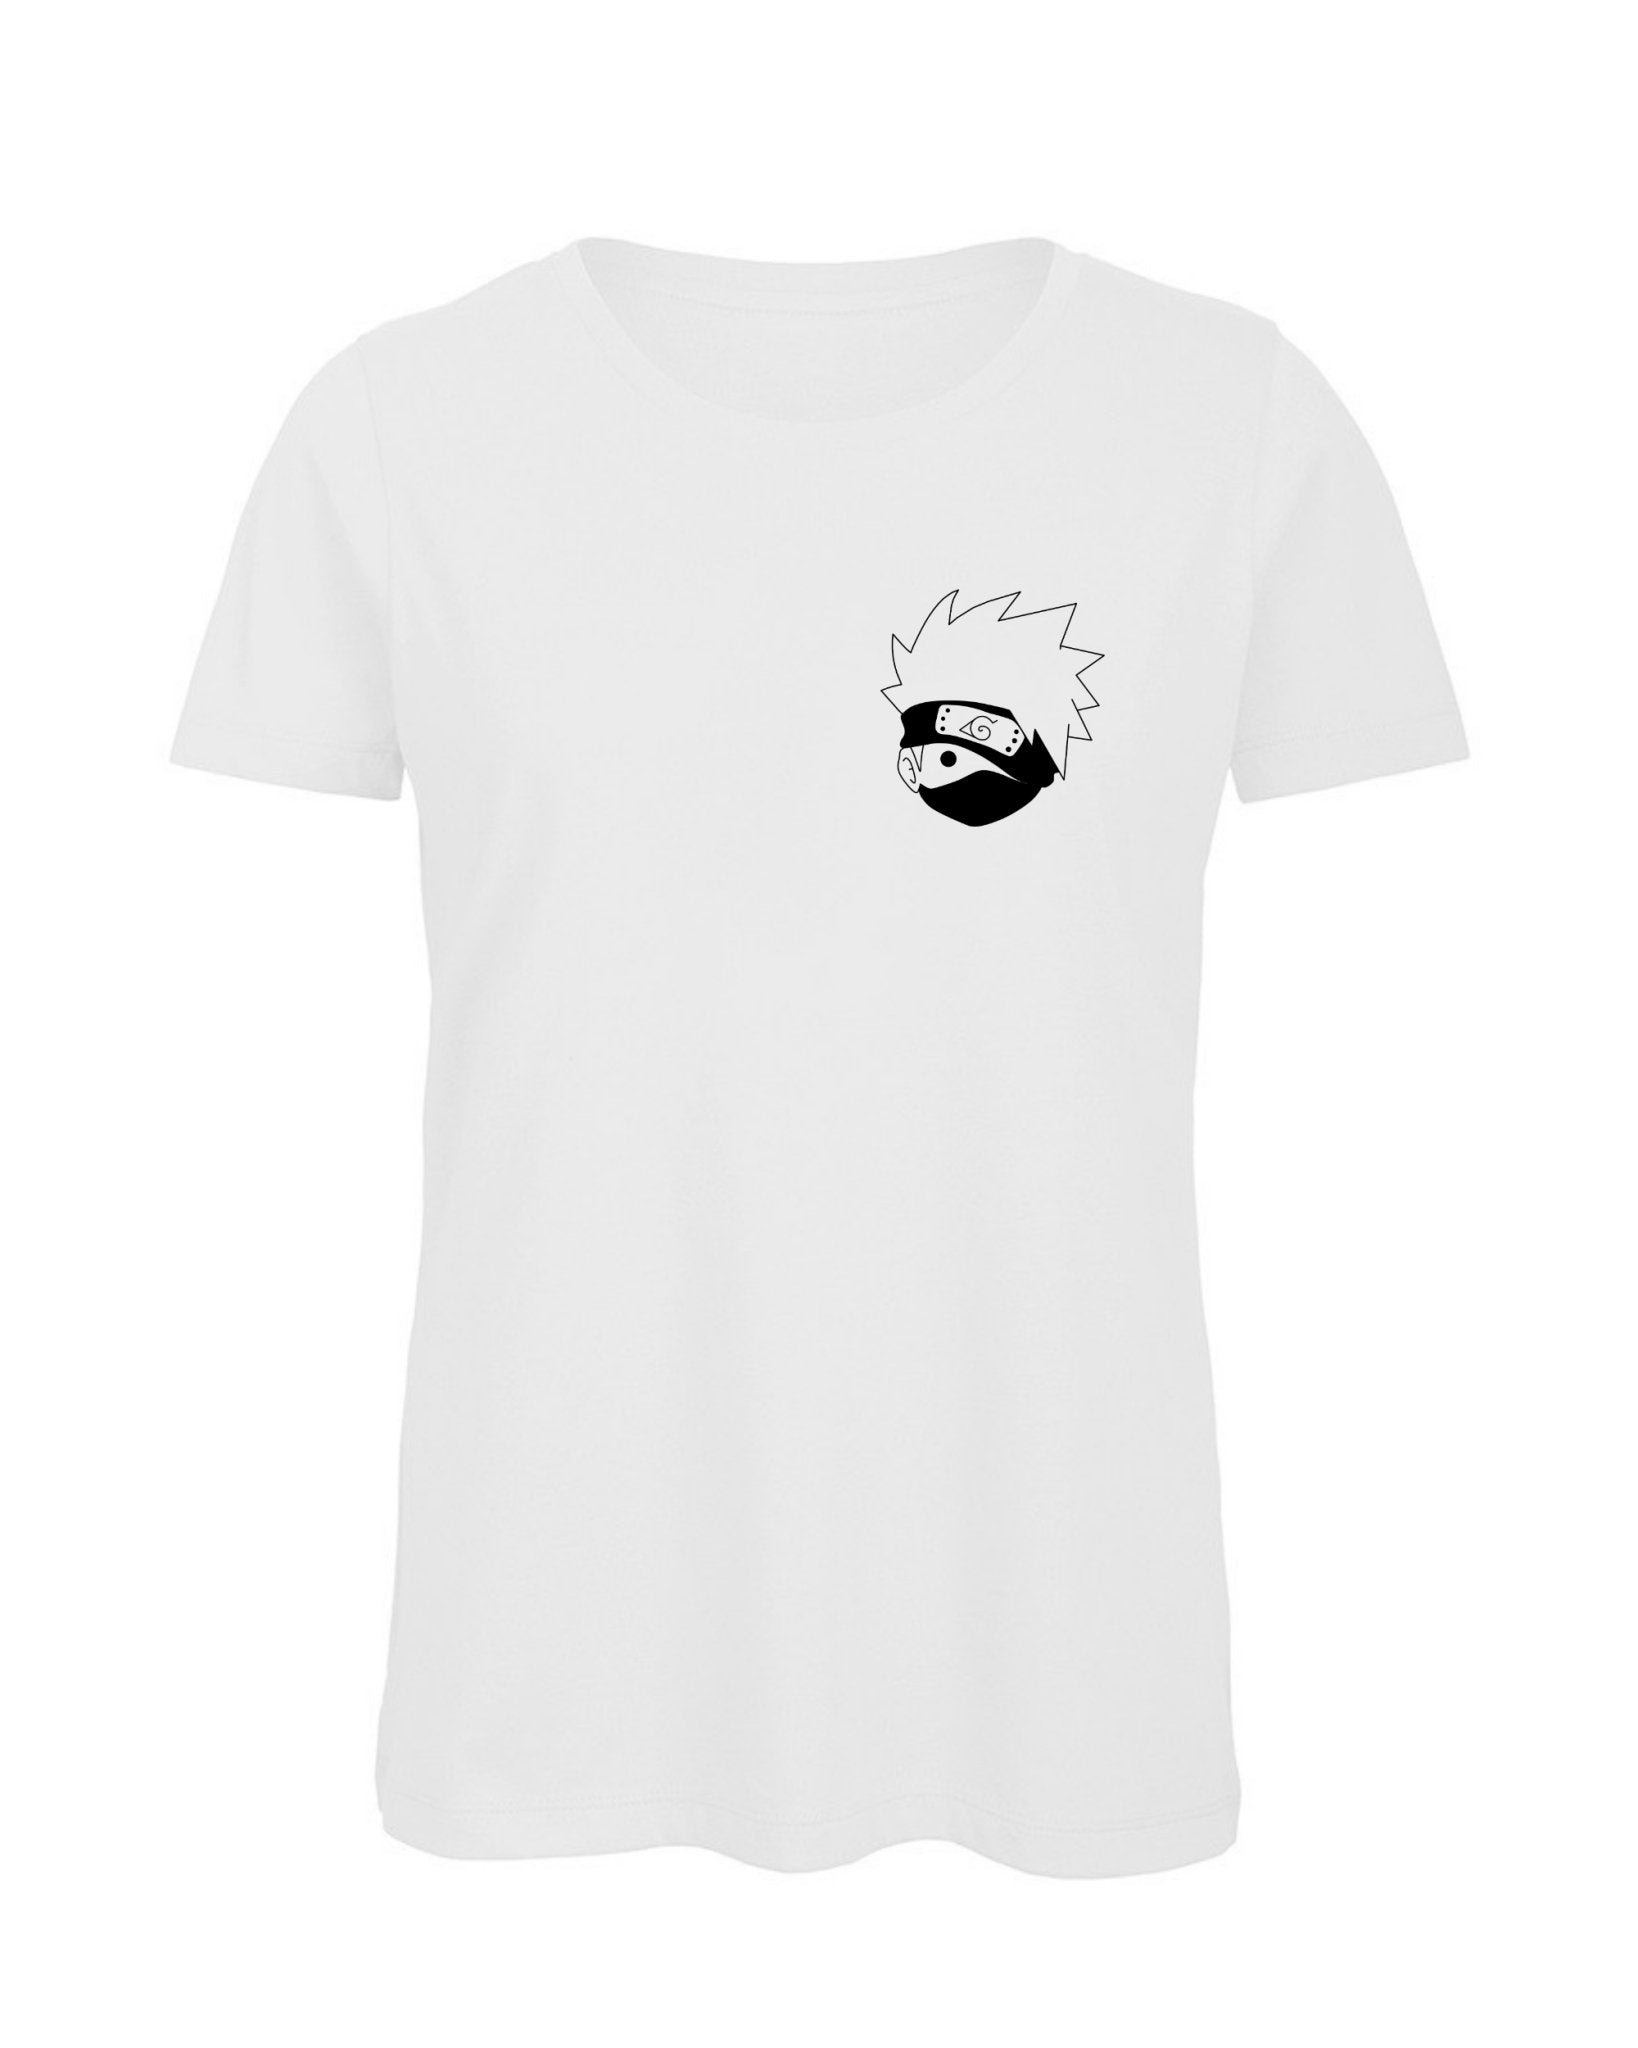 T-shirt bianca con ricamo Ninja - Follie by Alice